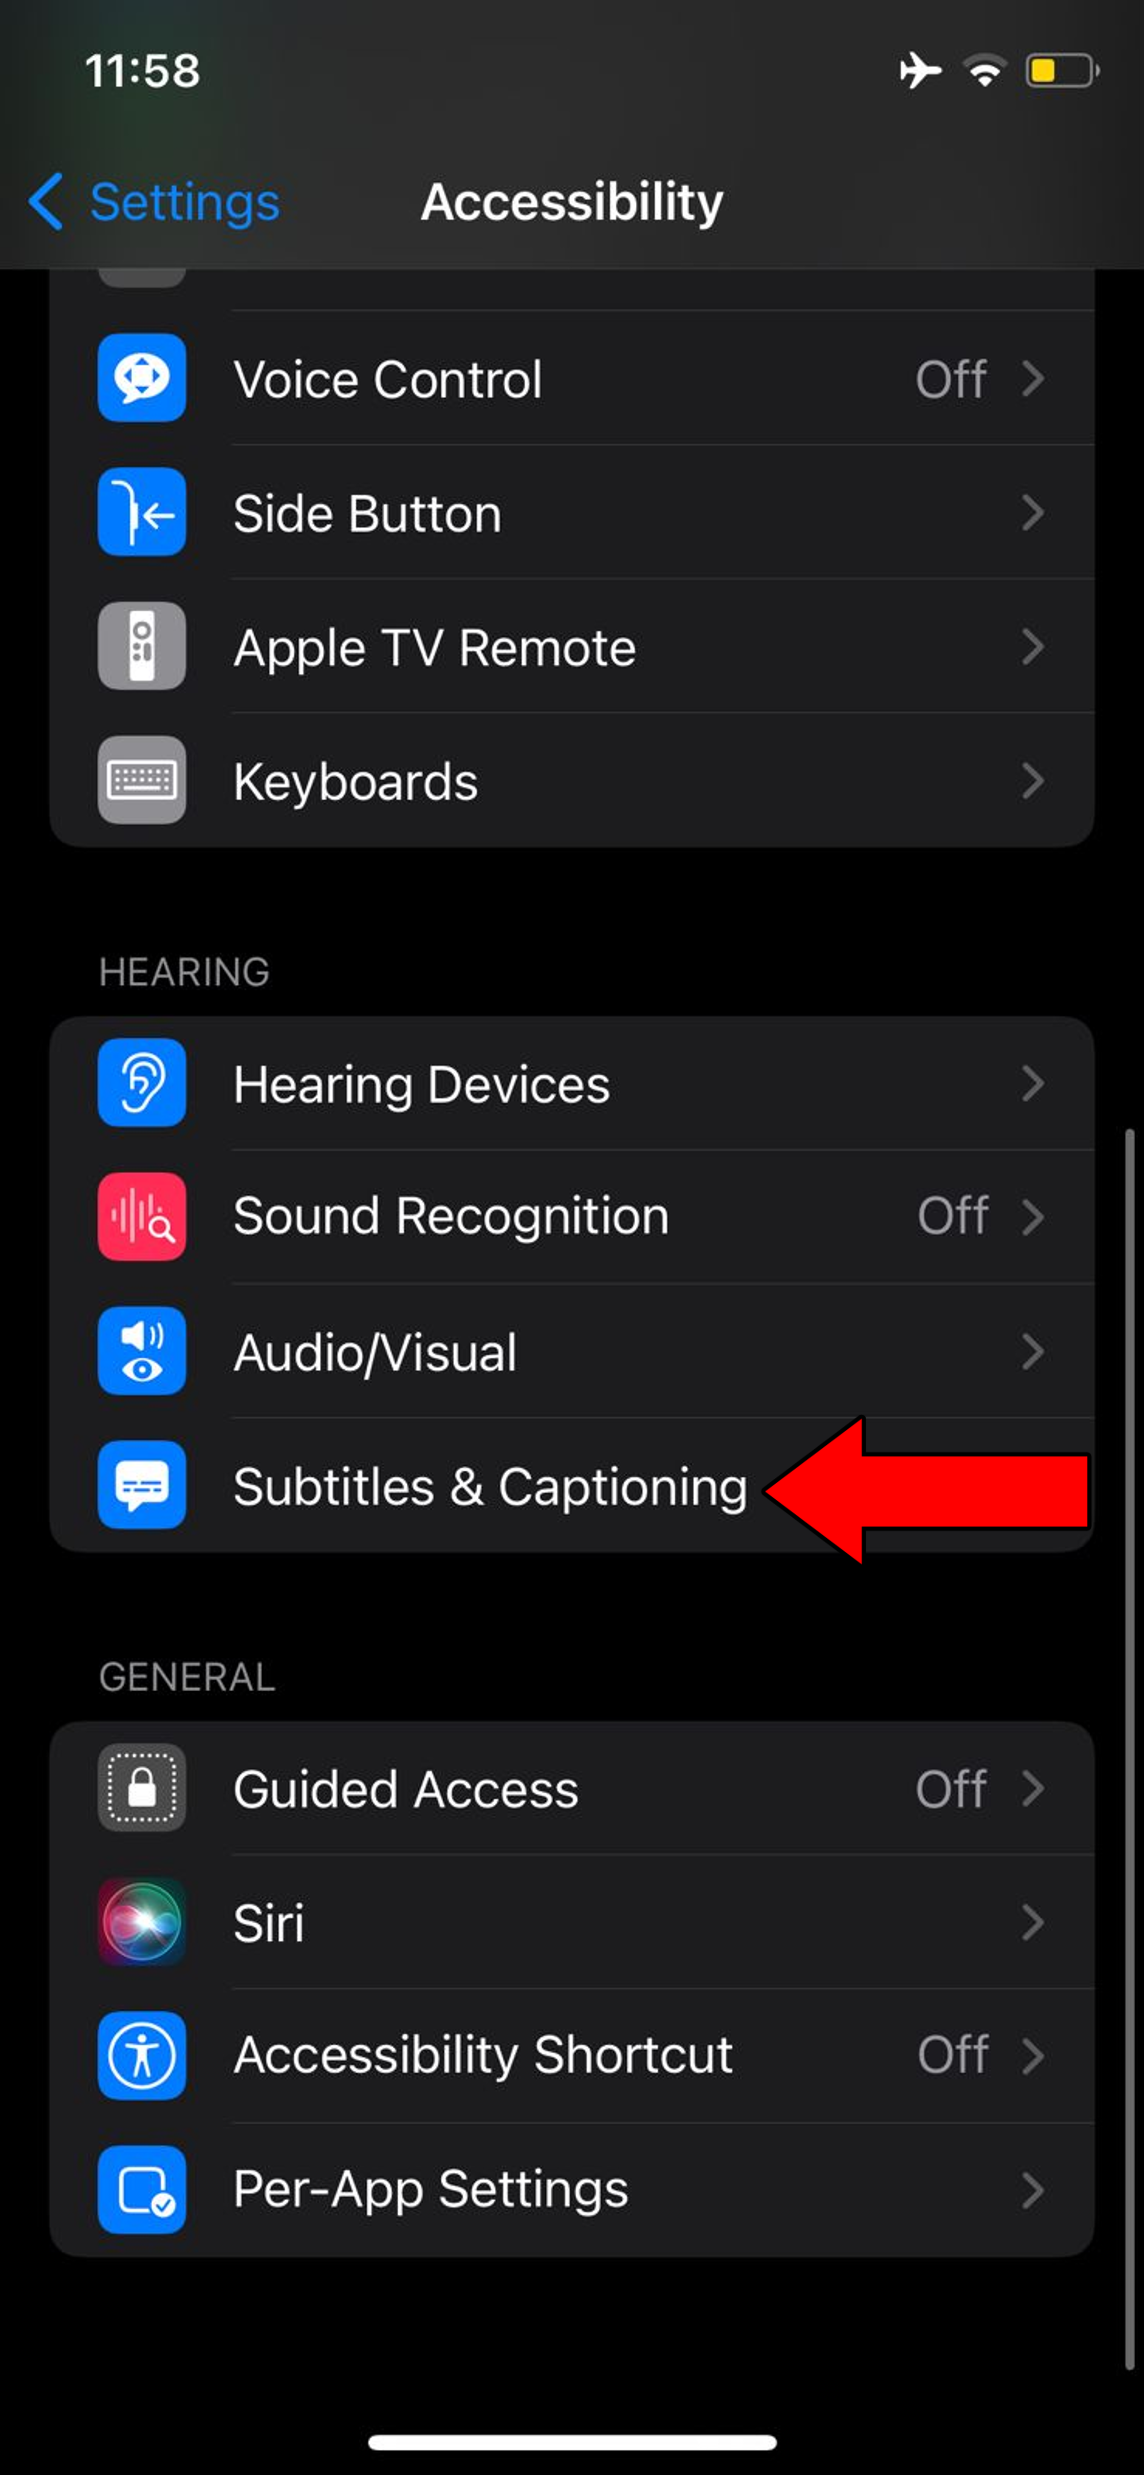 Changing Subtitles & Captioning settings on iOS